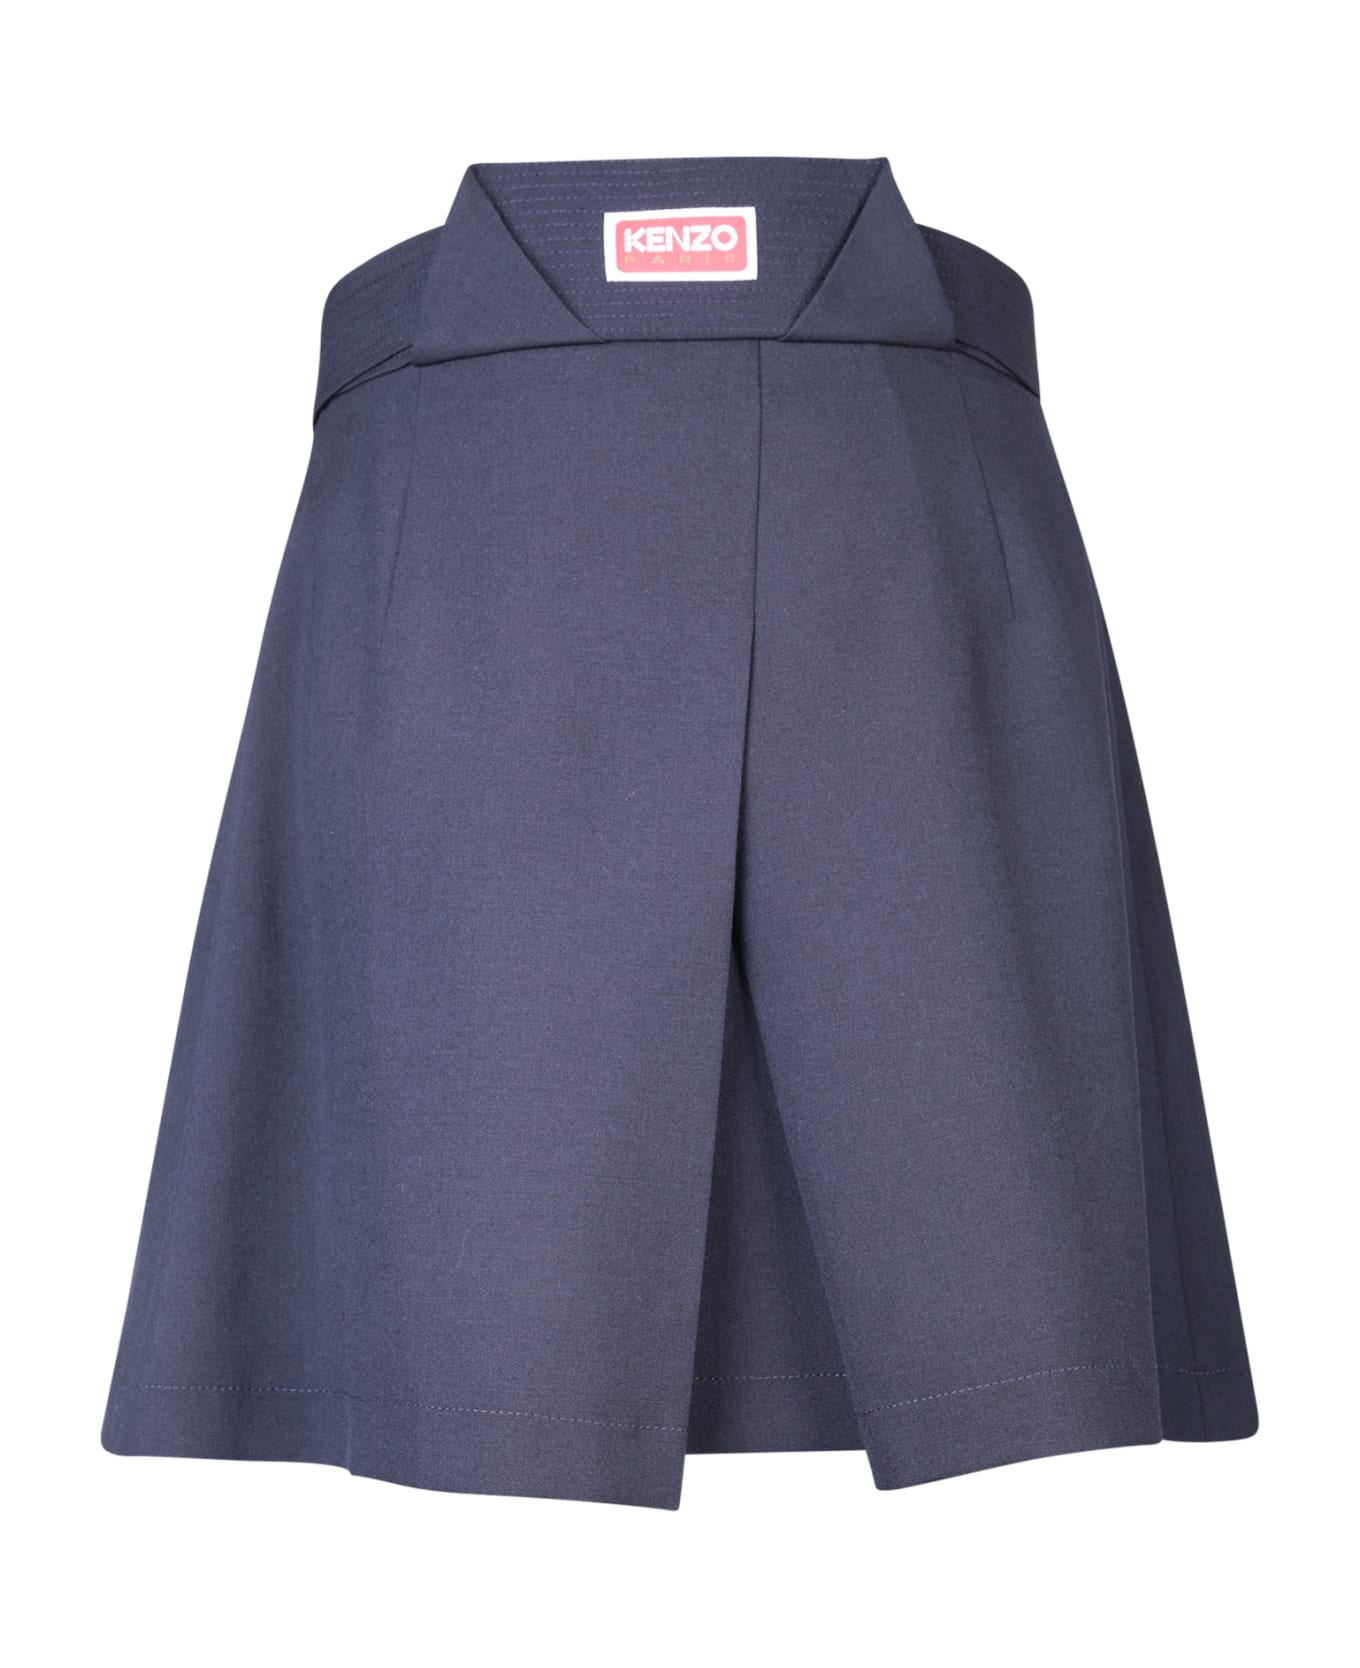 Kenzo Pleated Mini Skirt - Bleu Nuit